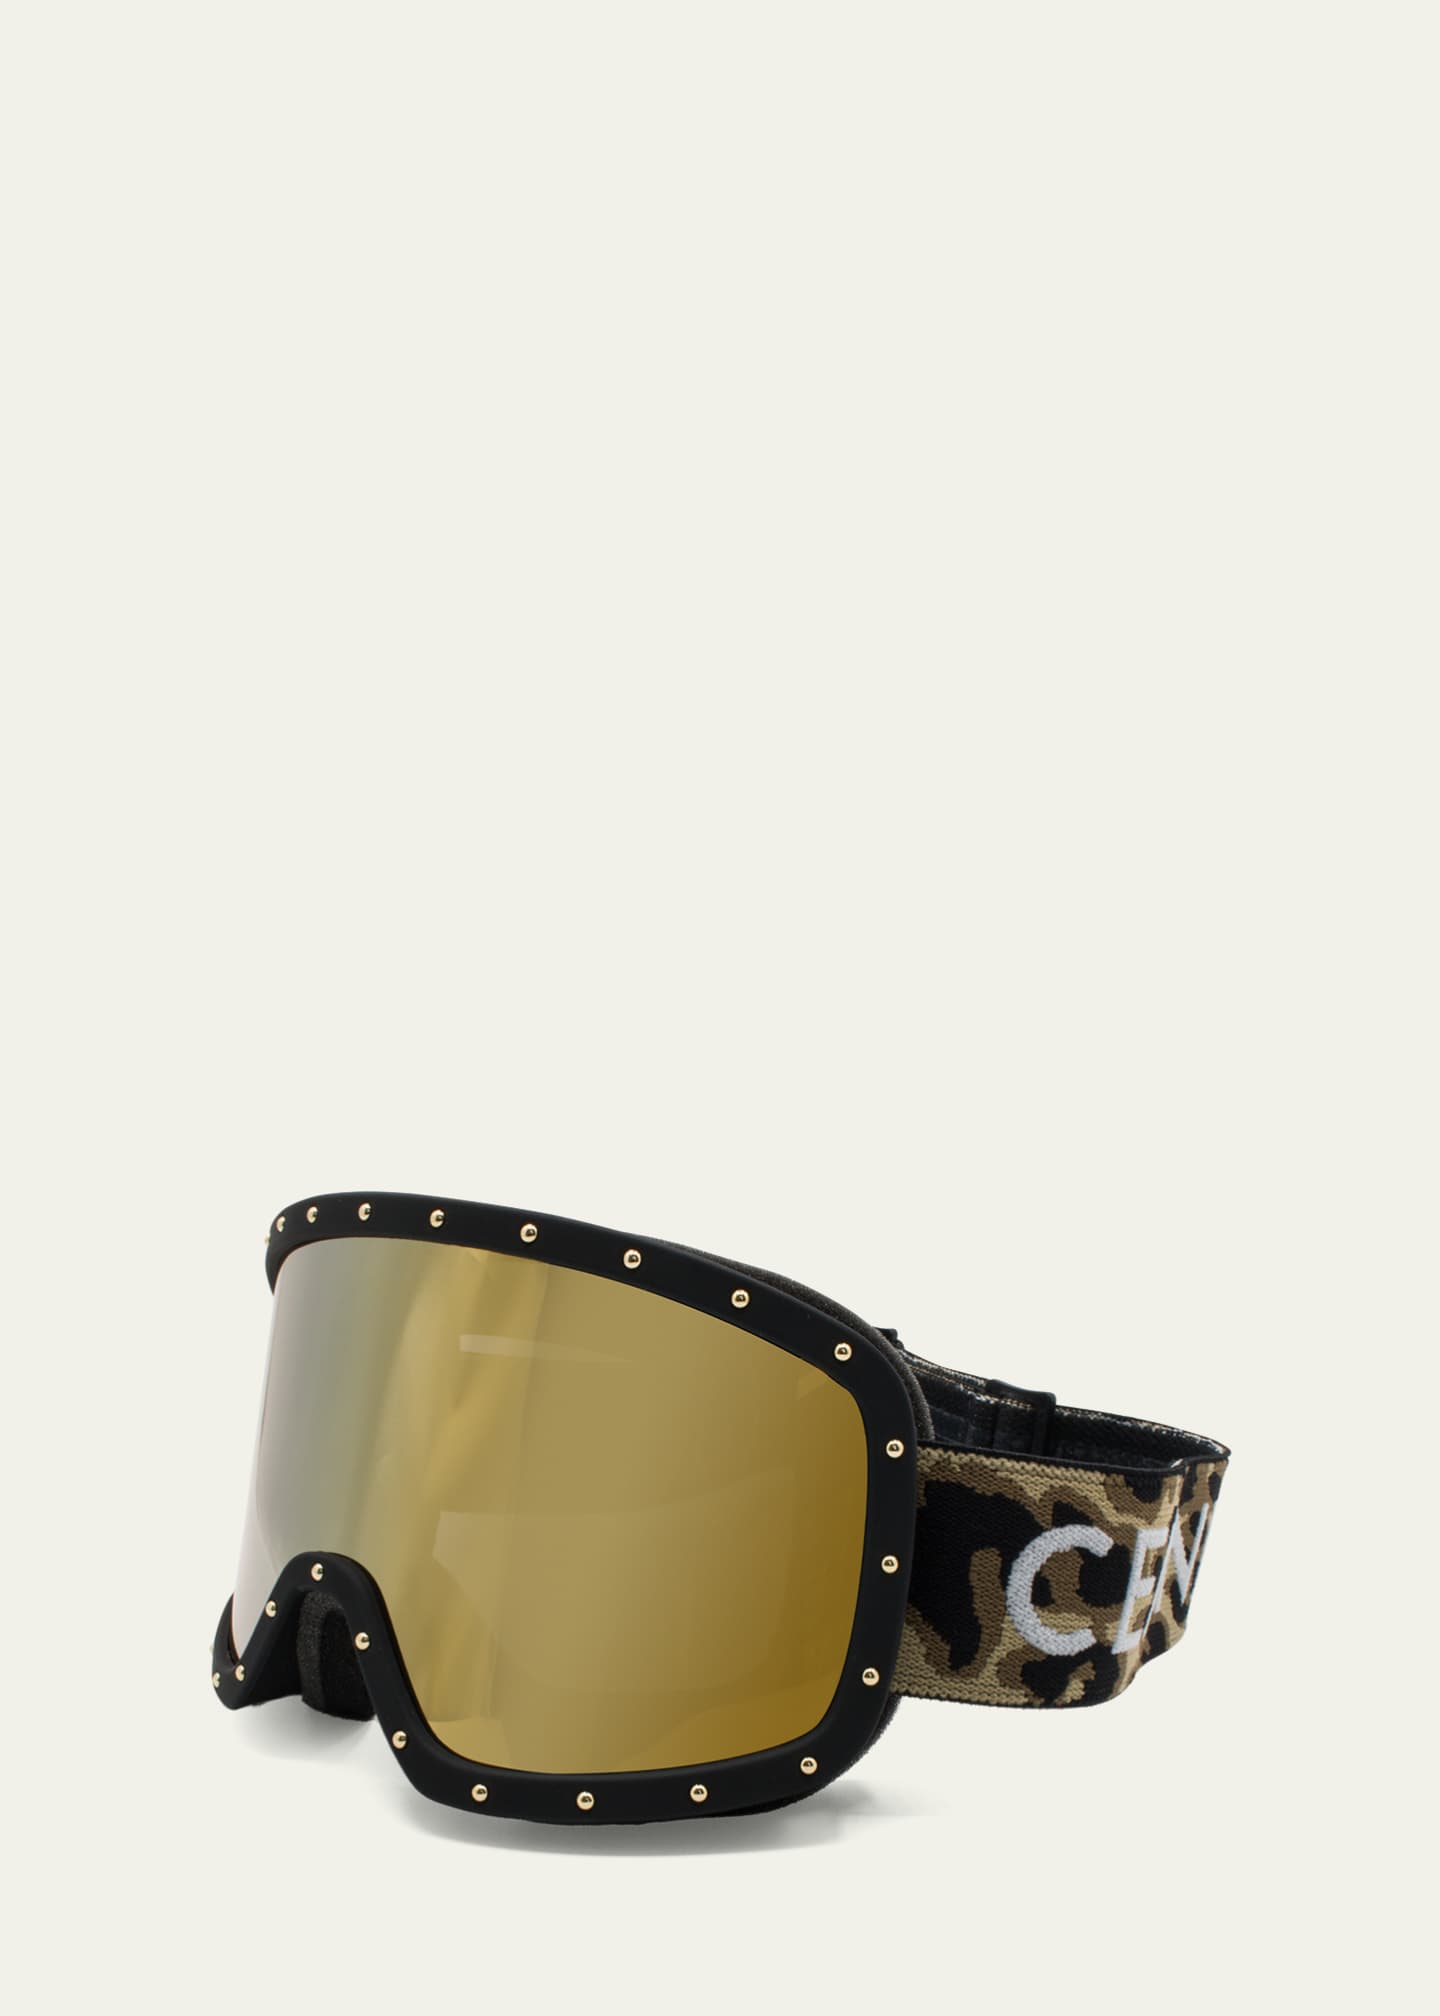 Ski goggles in black - Celine Eyewear